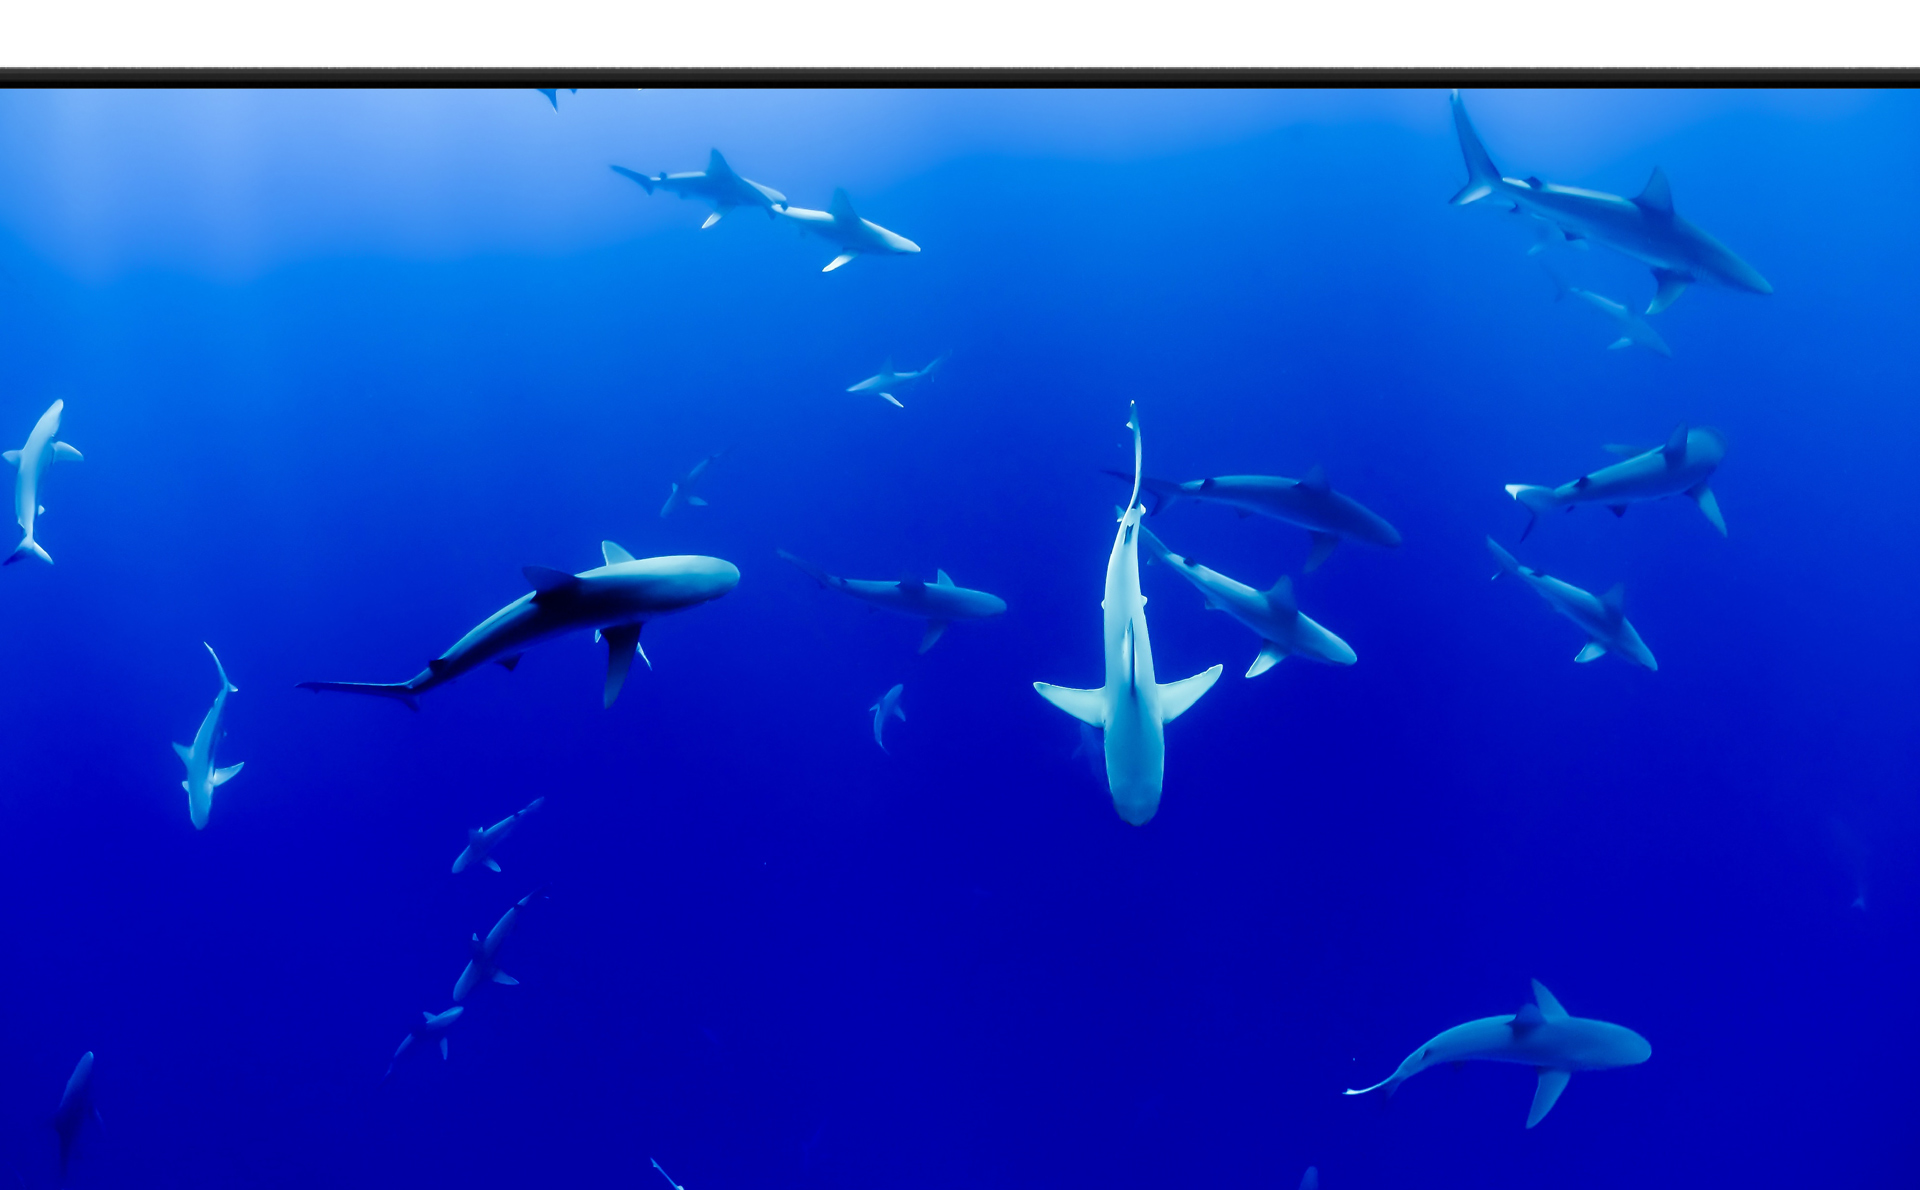  a deep sea with many sharks image as screen